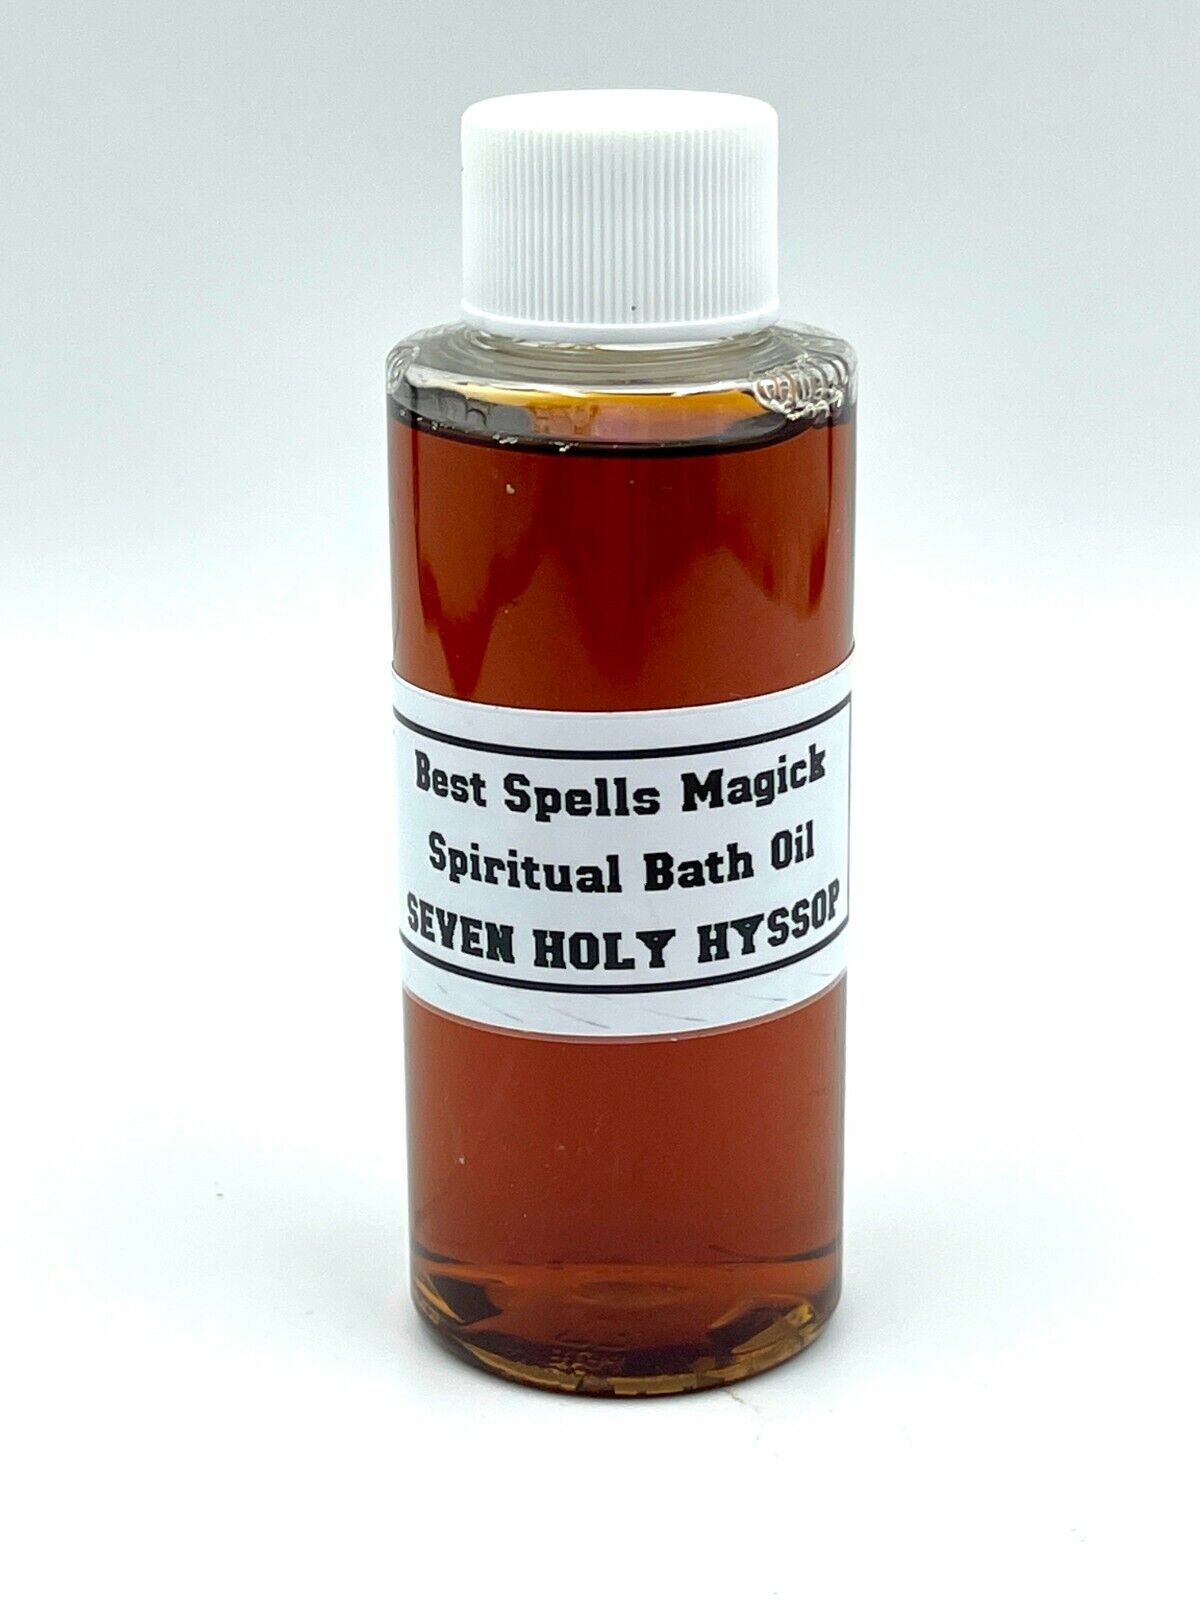 7 HOLY HYSSOP BATH Hand-Made Hoodoo Blend by Best Spells Magick